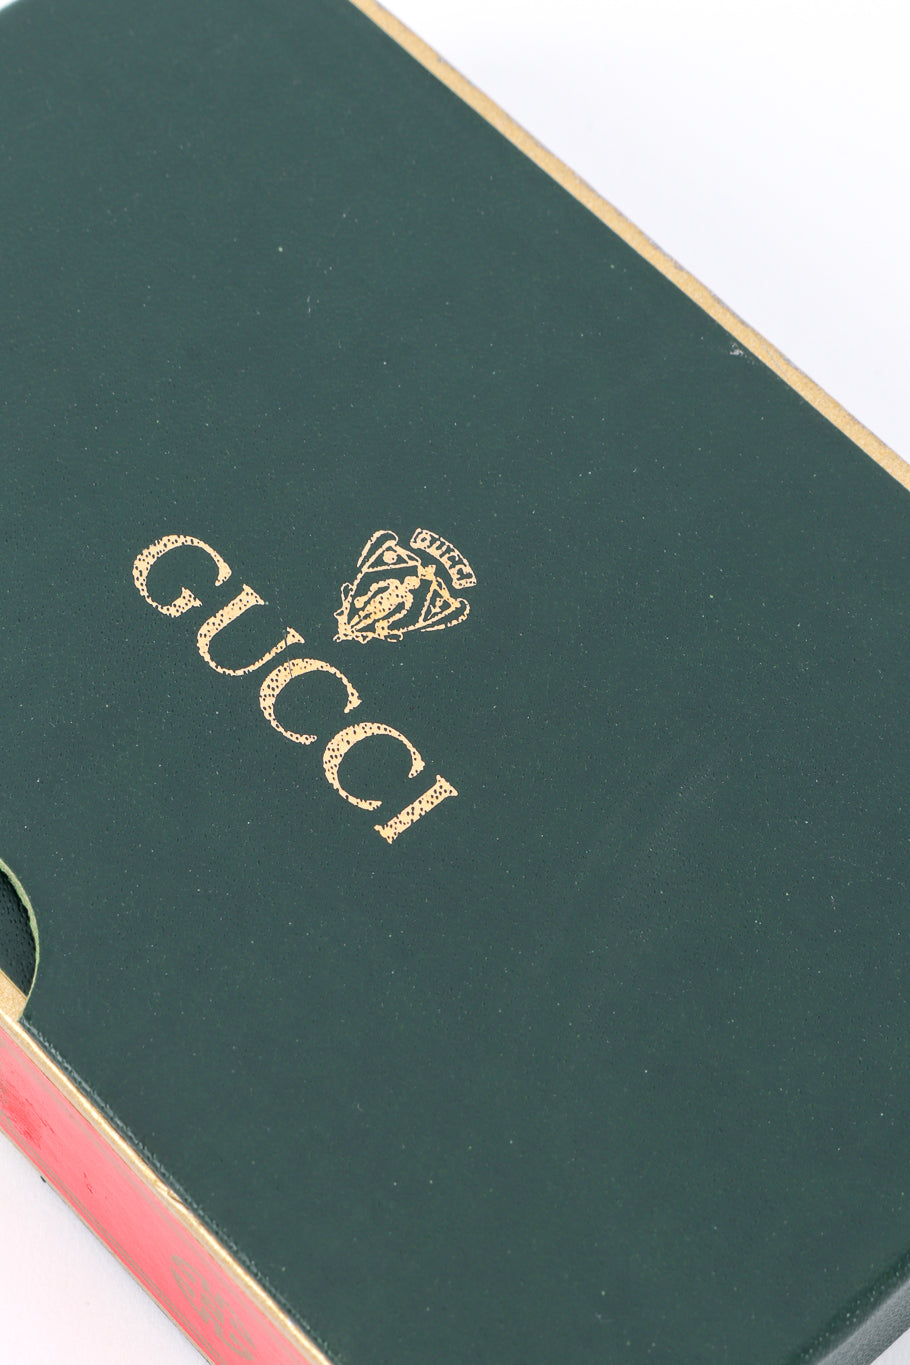 Vintage Gucci Red & Green 2 Deck Playing Card Set II signature stamp closeup @recessla